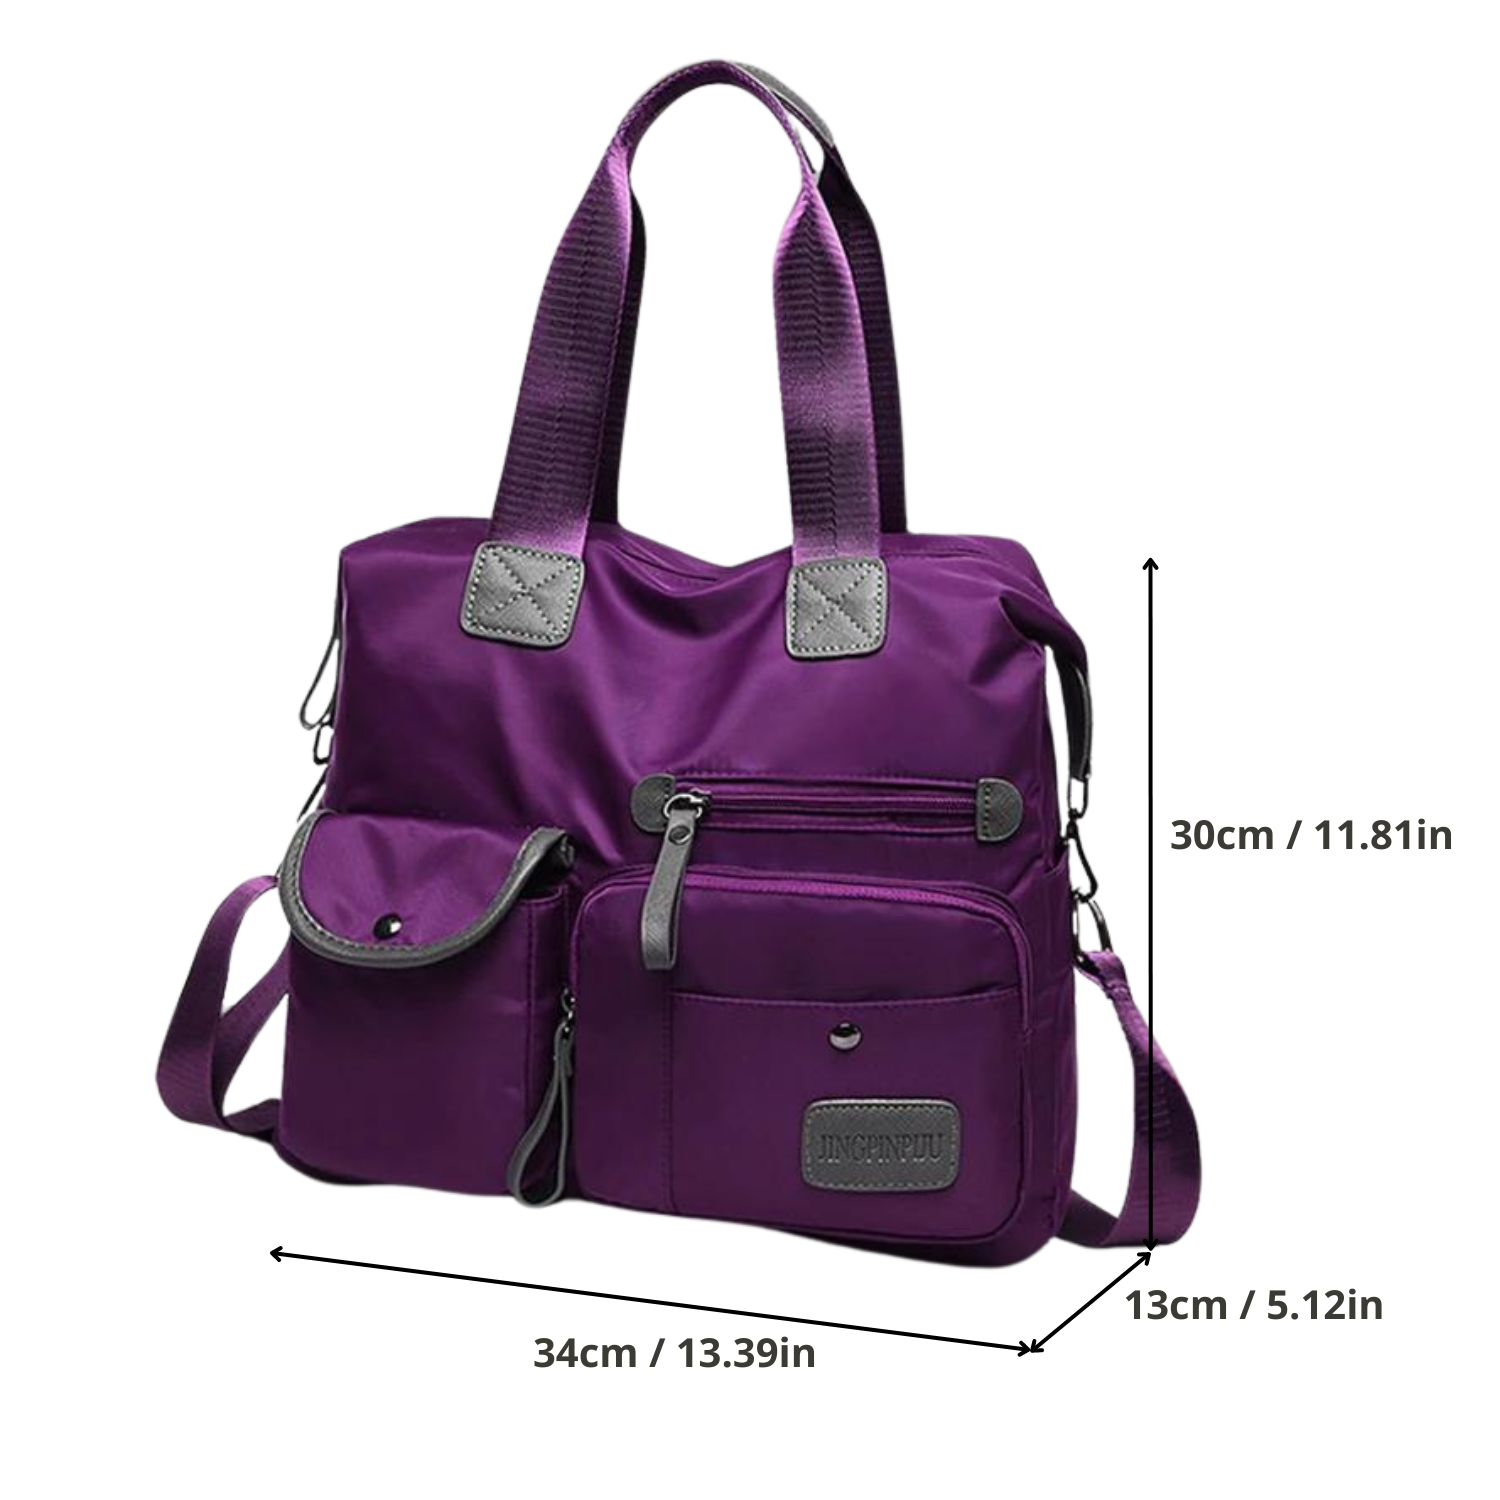 Versatile Nylon Messenger Bag - Chic & Practical